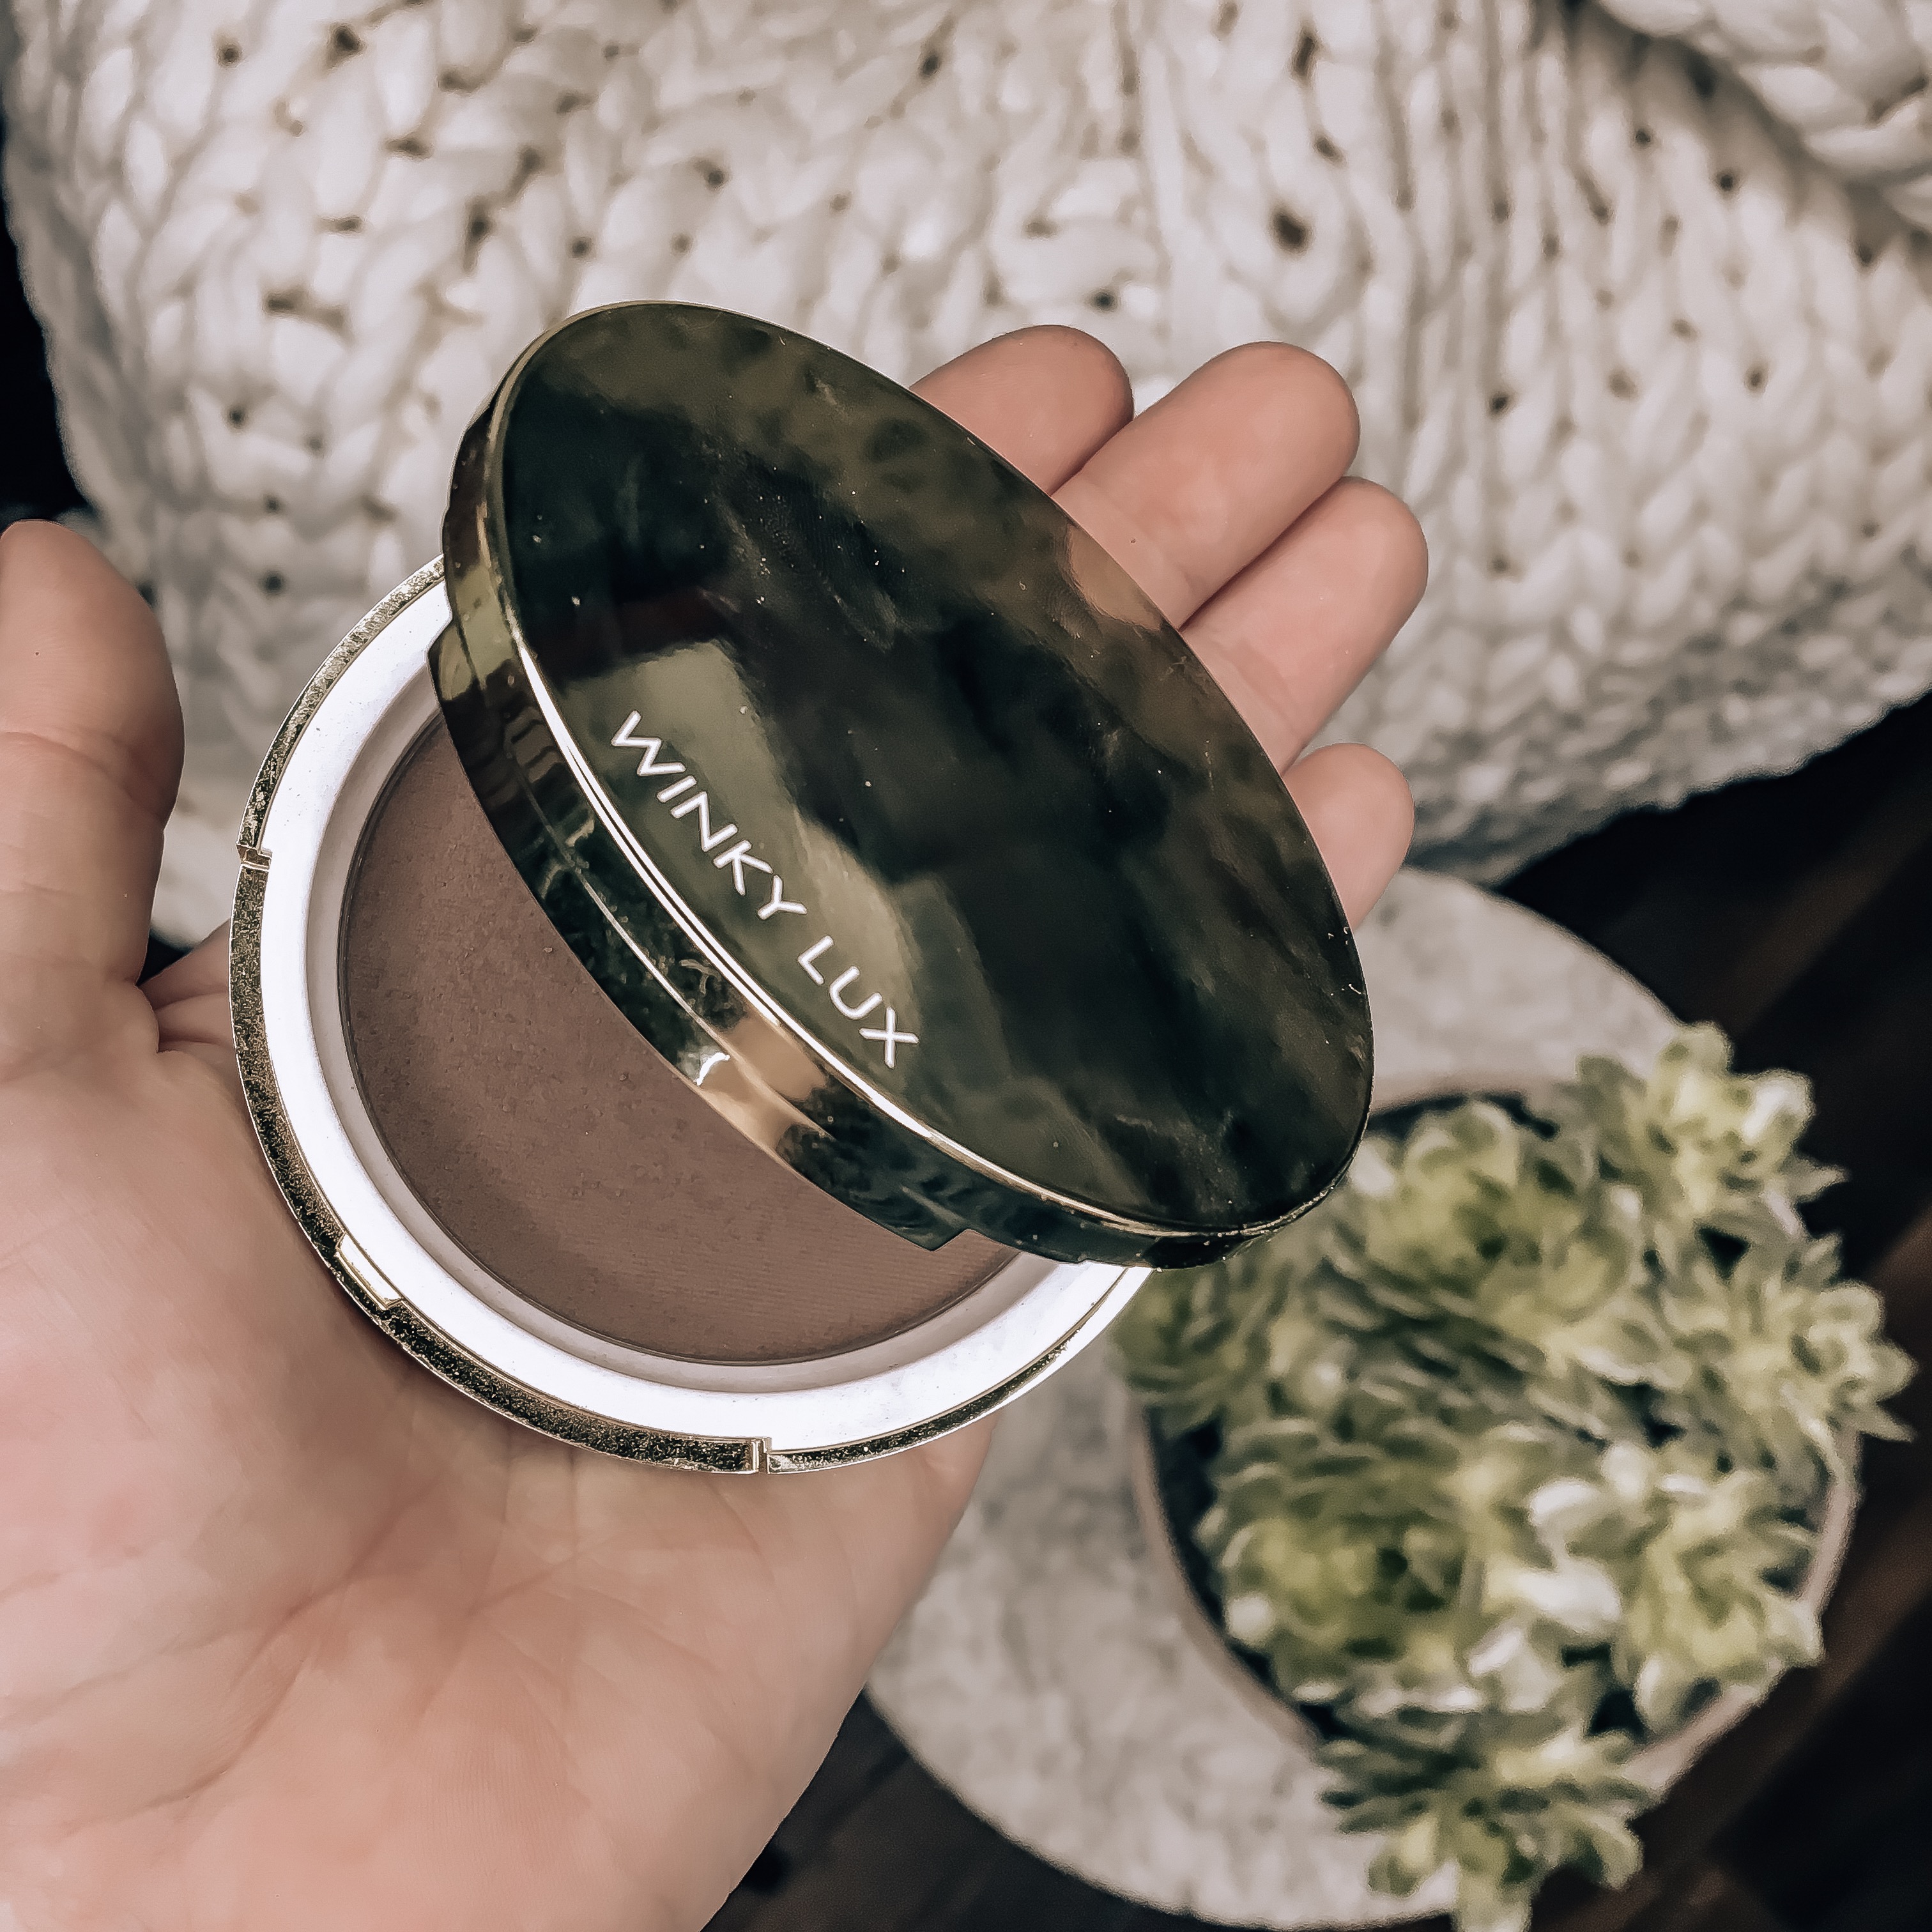 Winky Lux-Bronzer-Coffee Bronzer-Mocha-beauty products-makeup-roundup-favorites-june